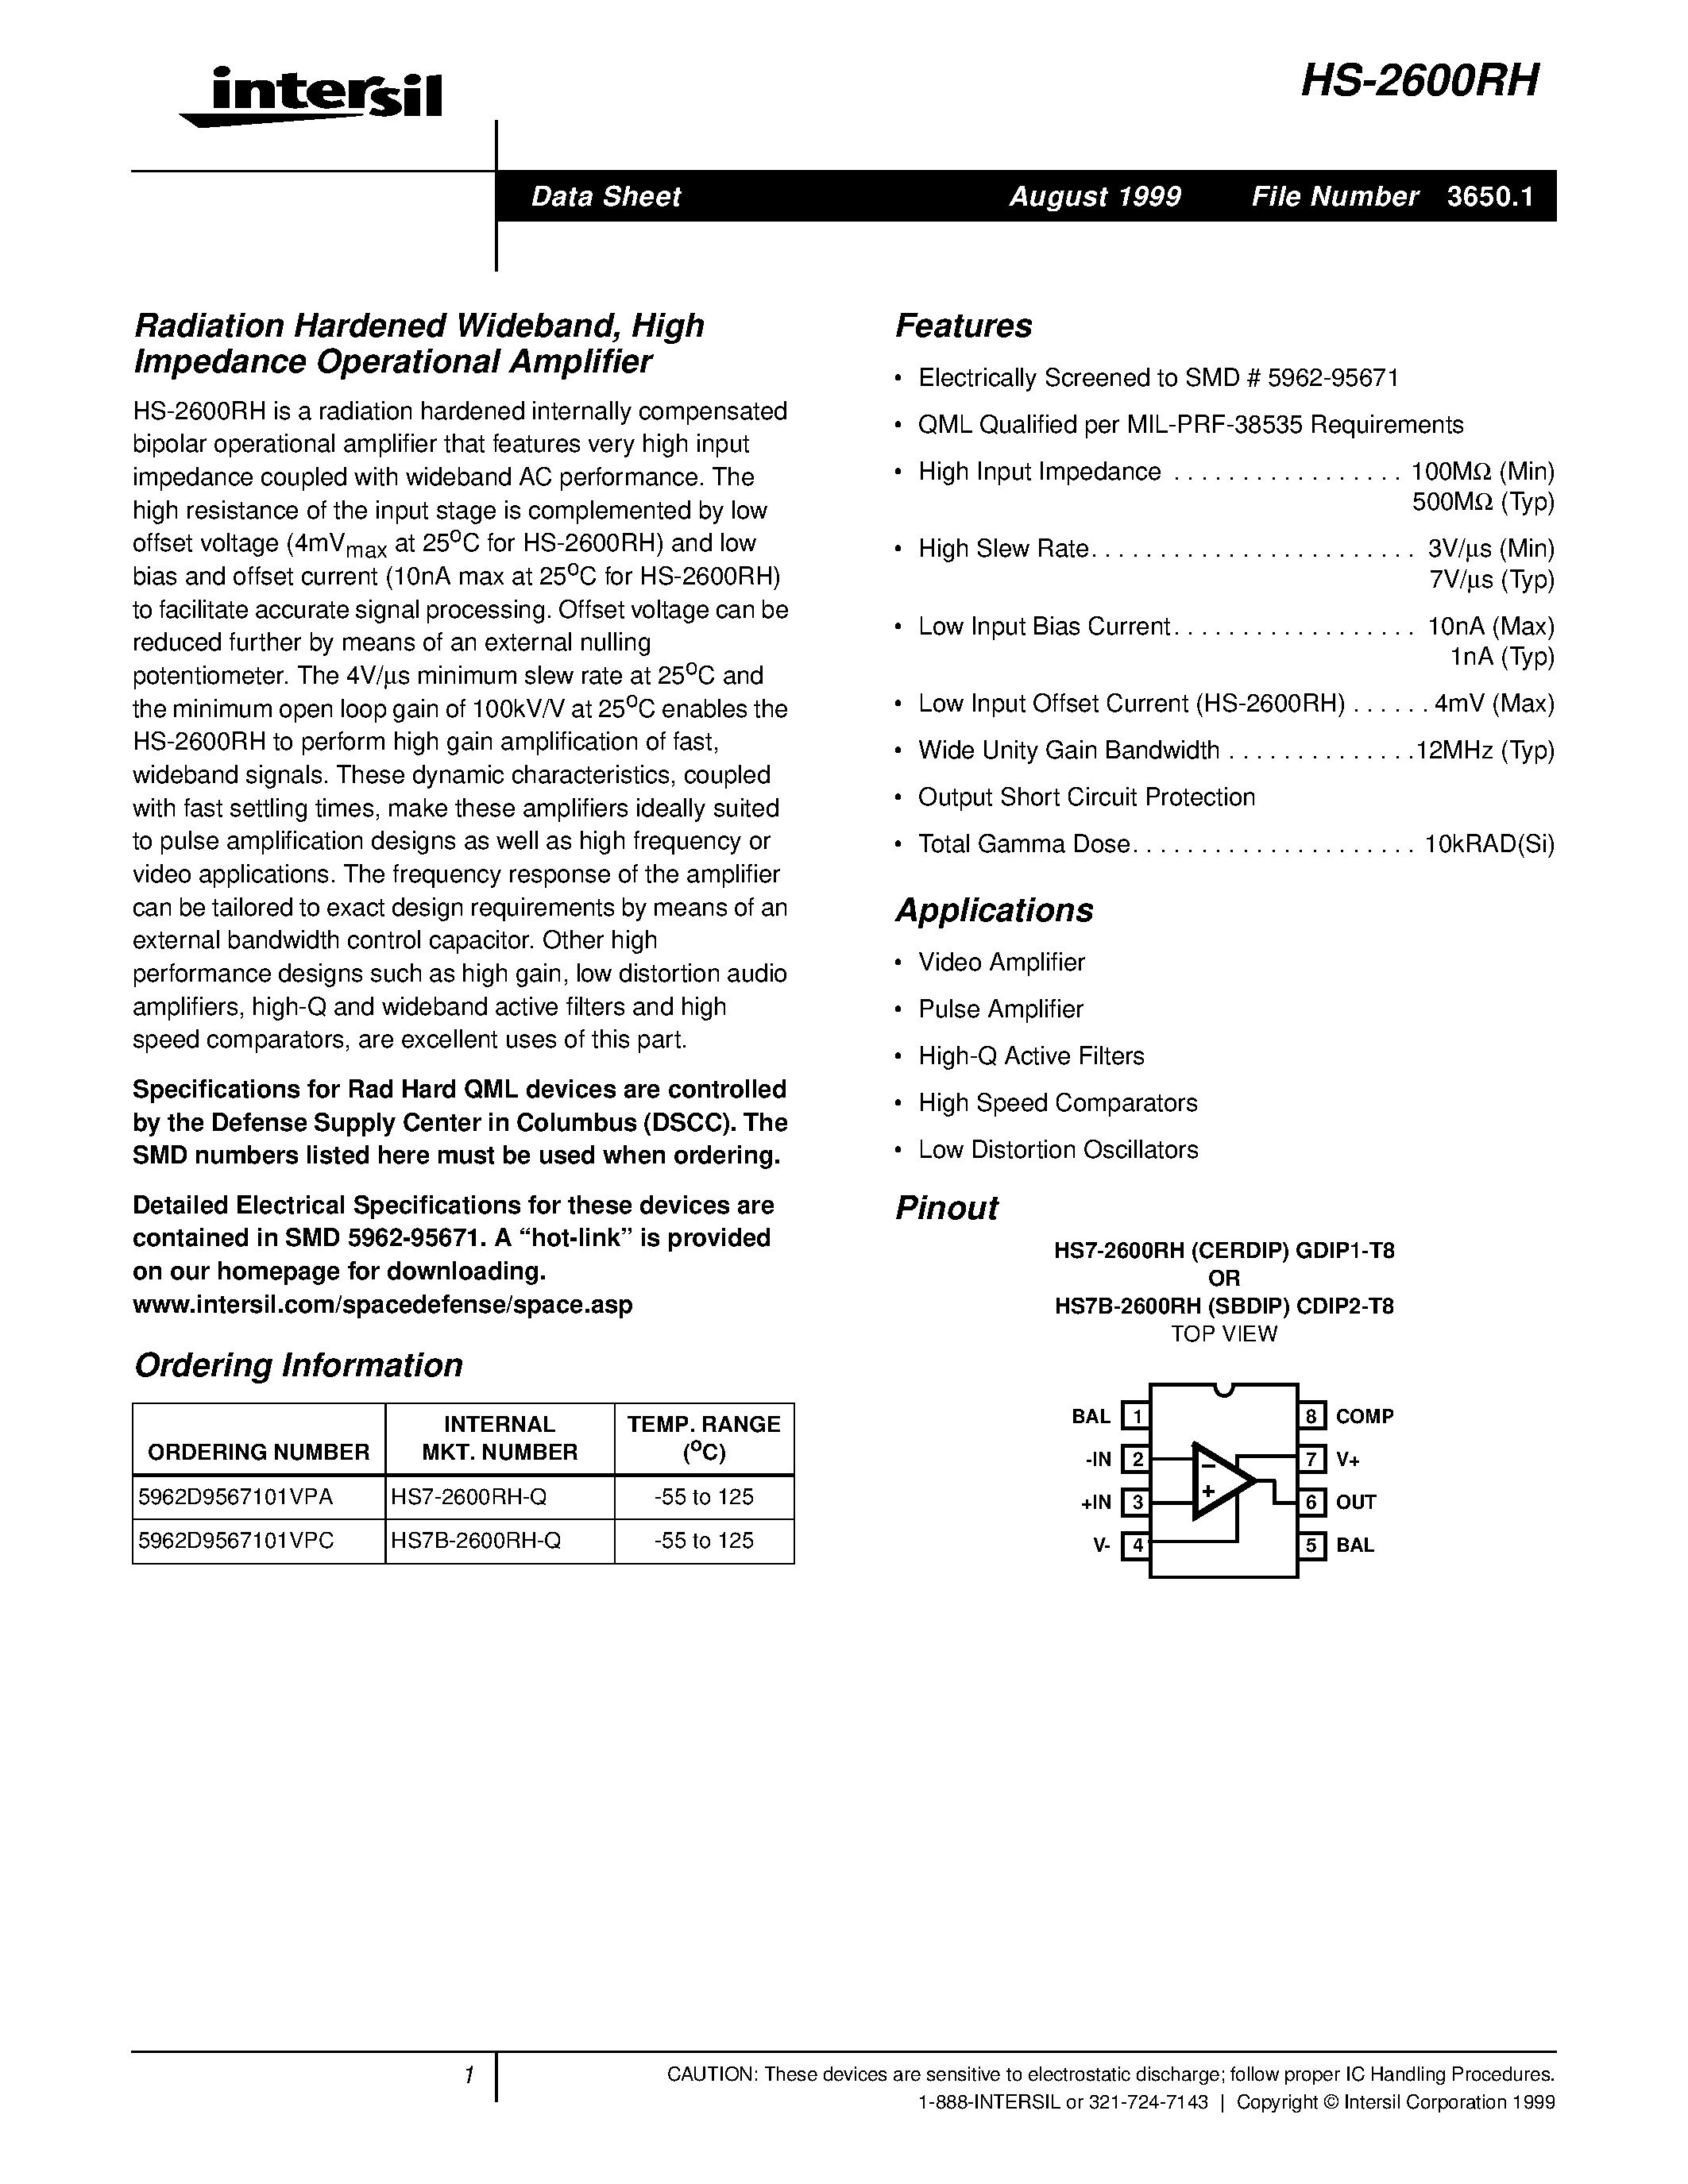 Даташит HS7B-2600RH-Q - Radiation Hardened Wideband/ High Impedance Operational Amplifier страница 1